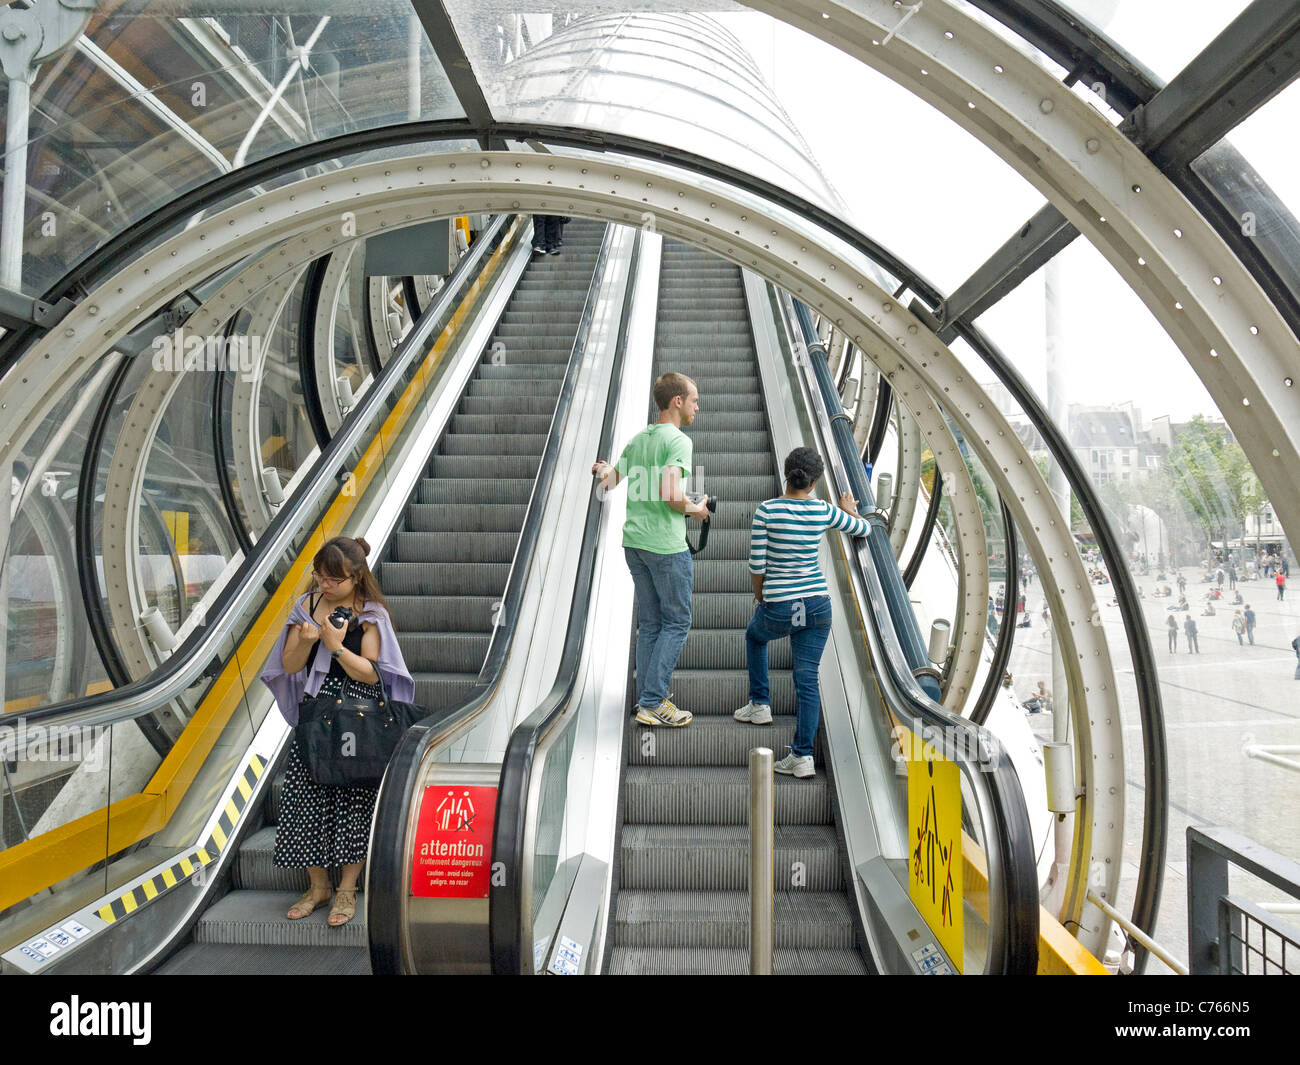 Escalator in Centre Pompidou Paris France EU Stock Photo